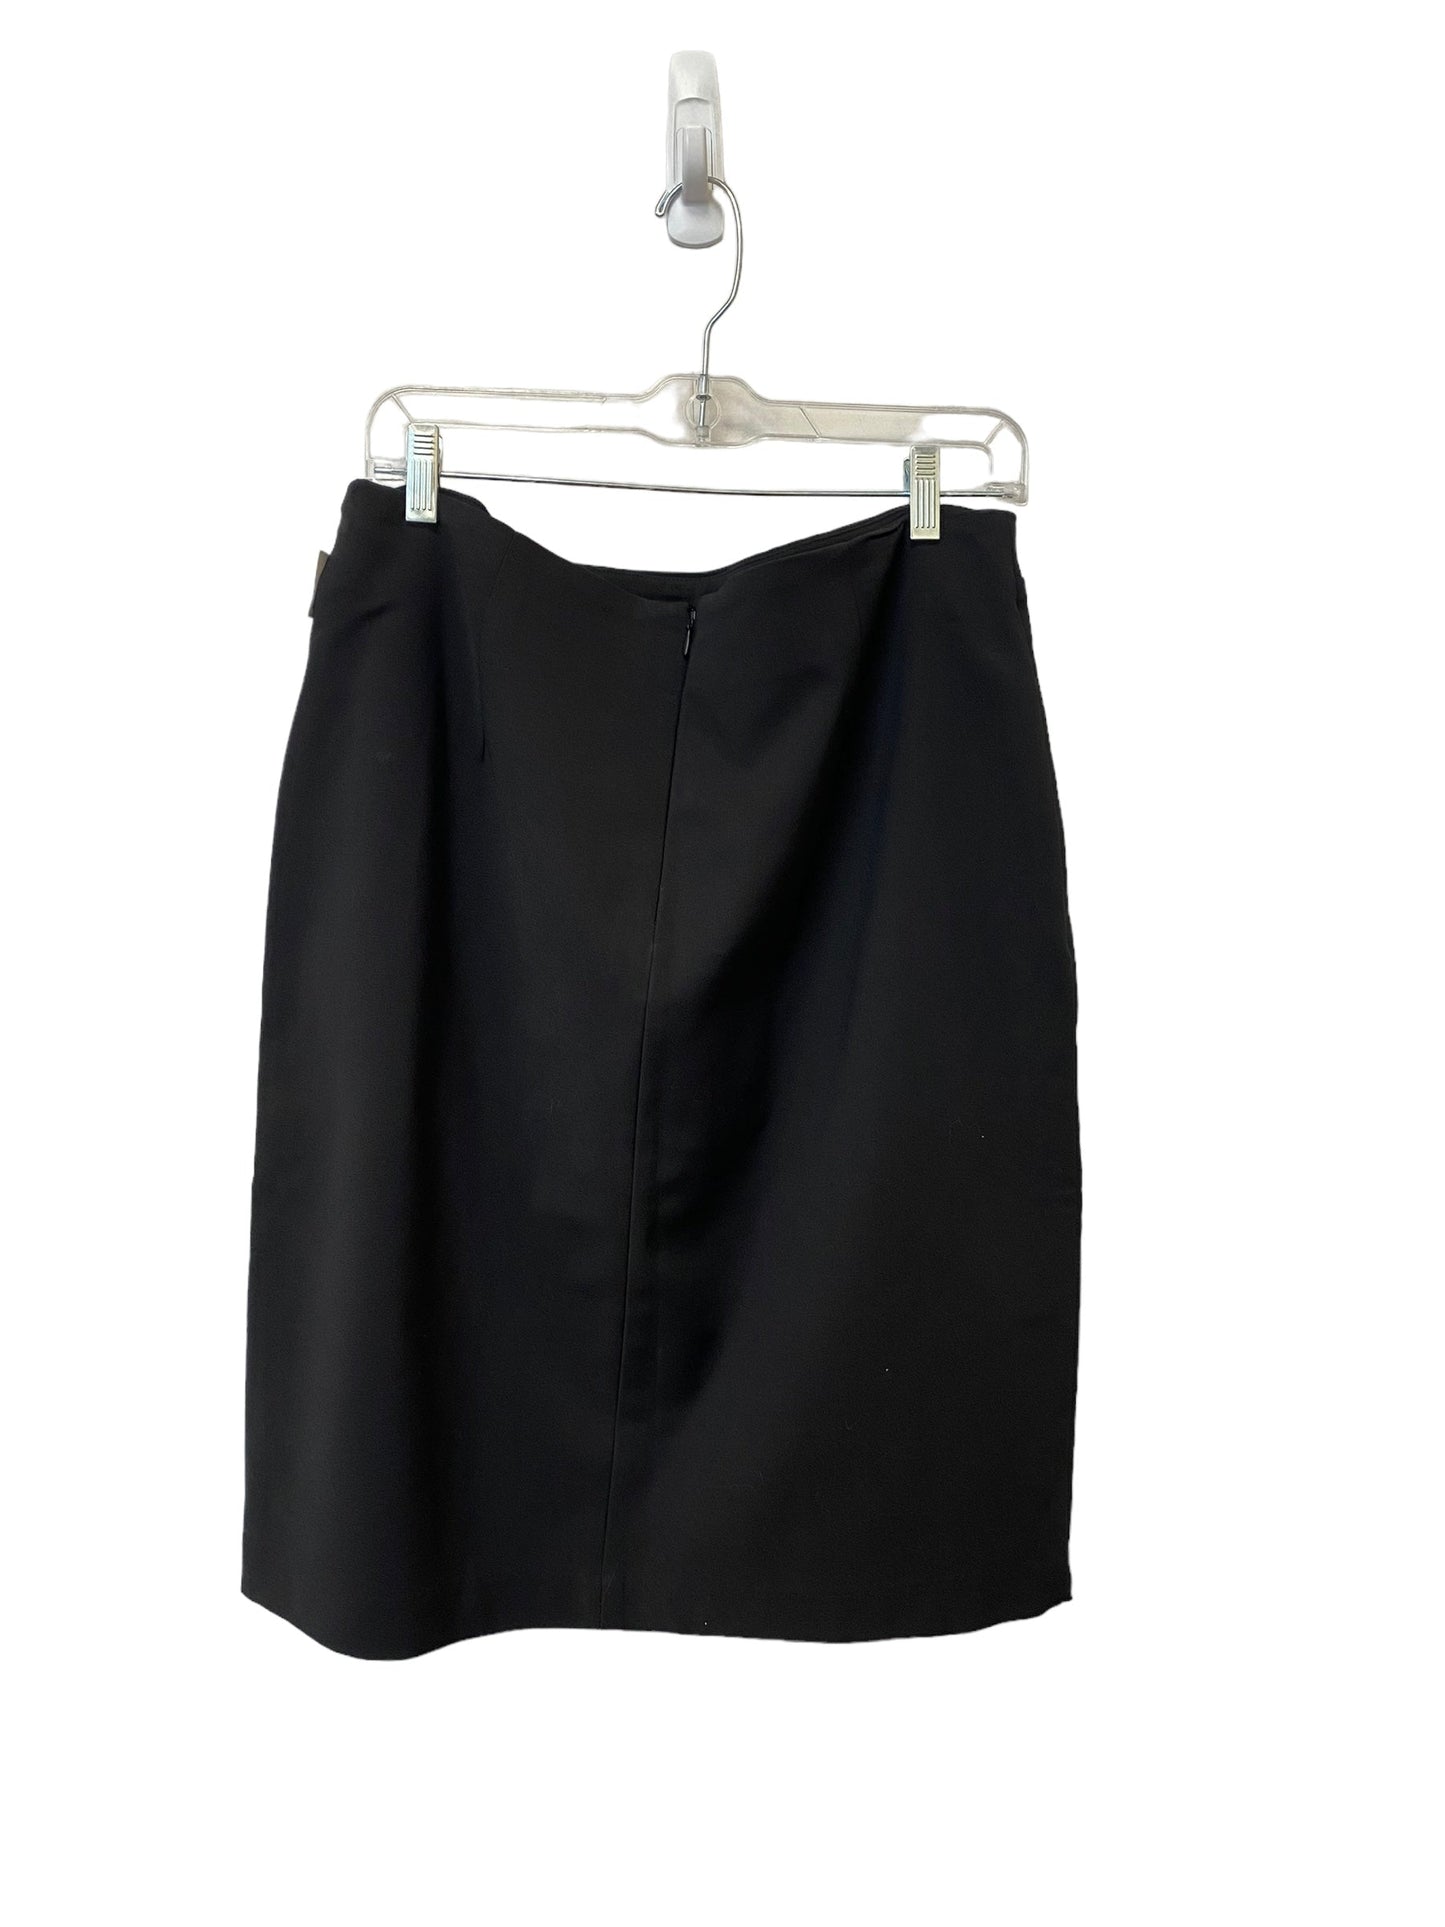 Skirt Midi By Alex Marie  Size: 14